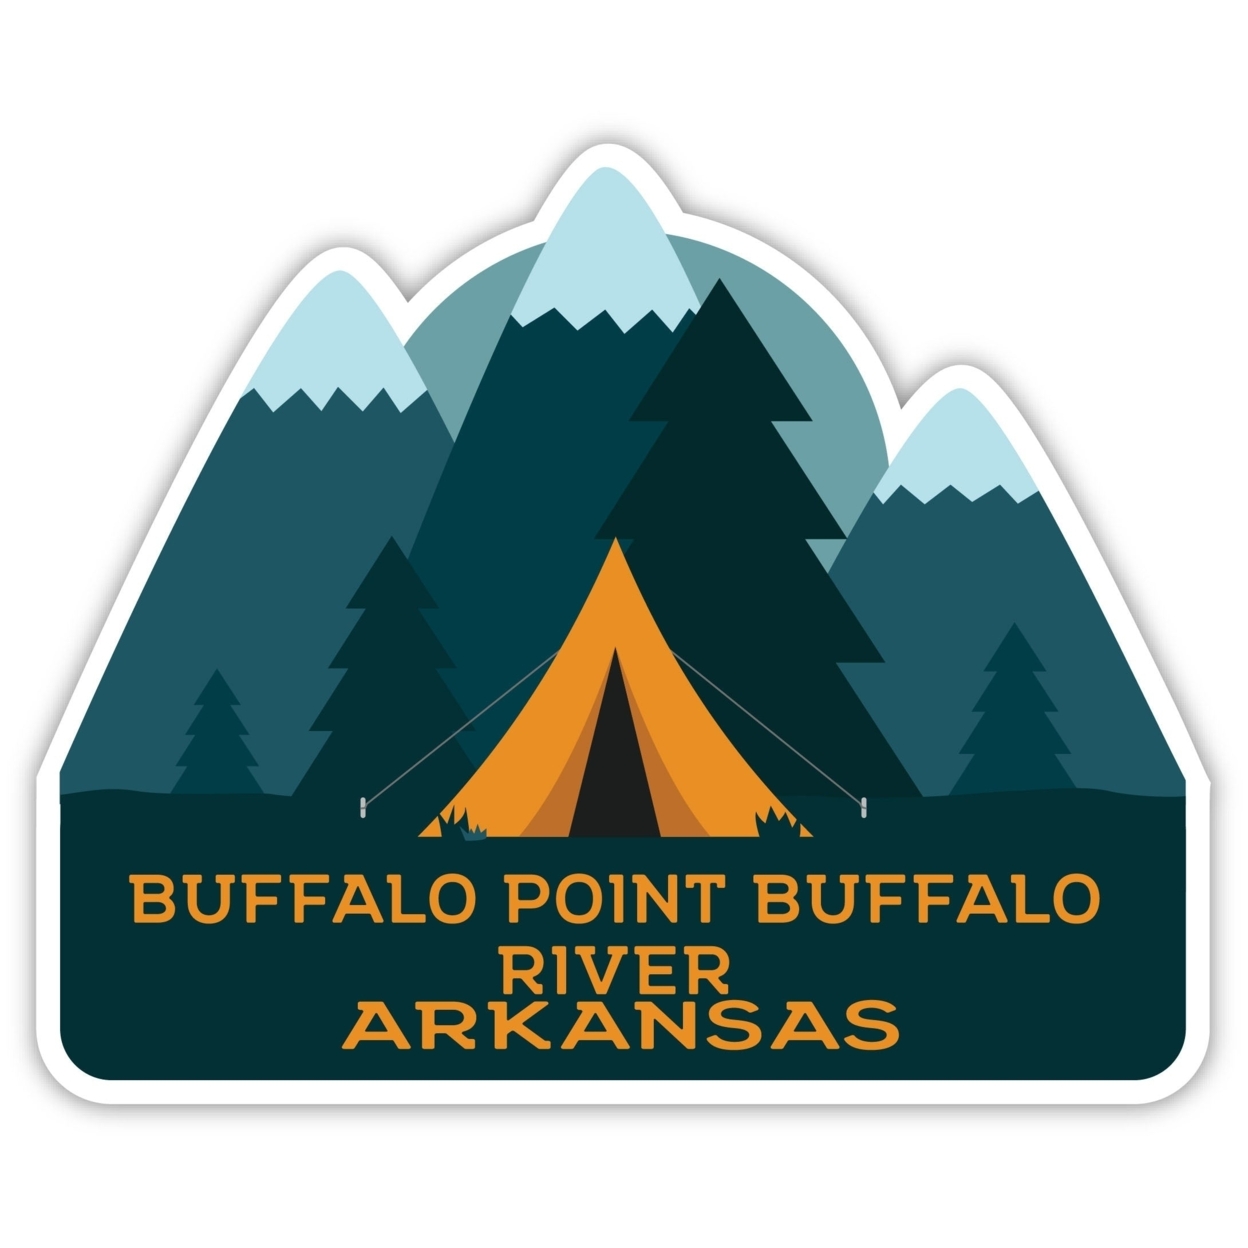 Buffalo Point Buffalo River Arkansas Souvenir Decorative Stickers (Choose Theme And Size) - 4-Pack, 8-Inch, Tent